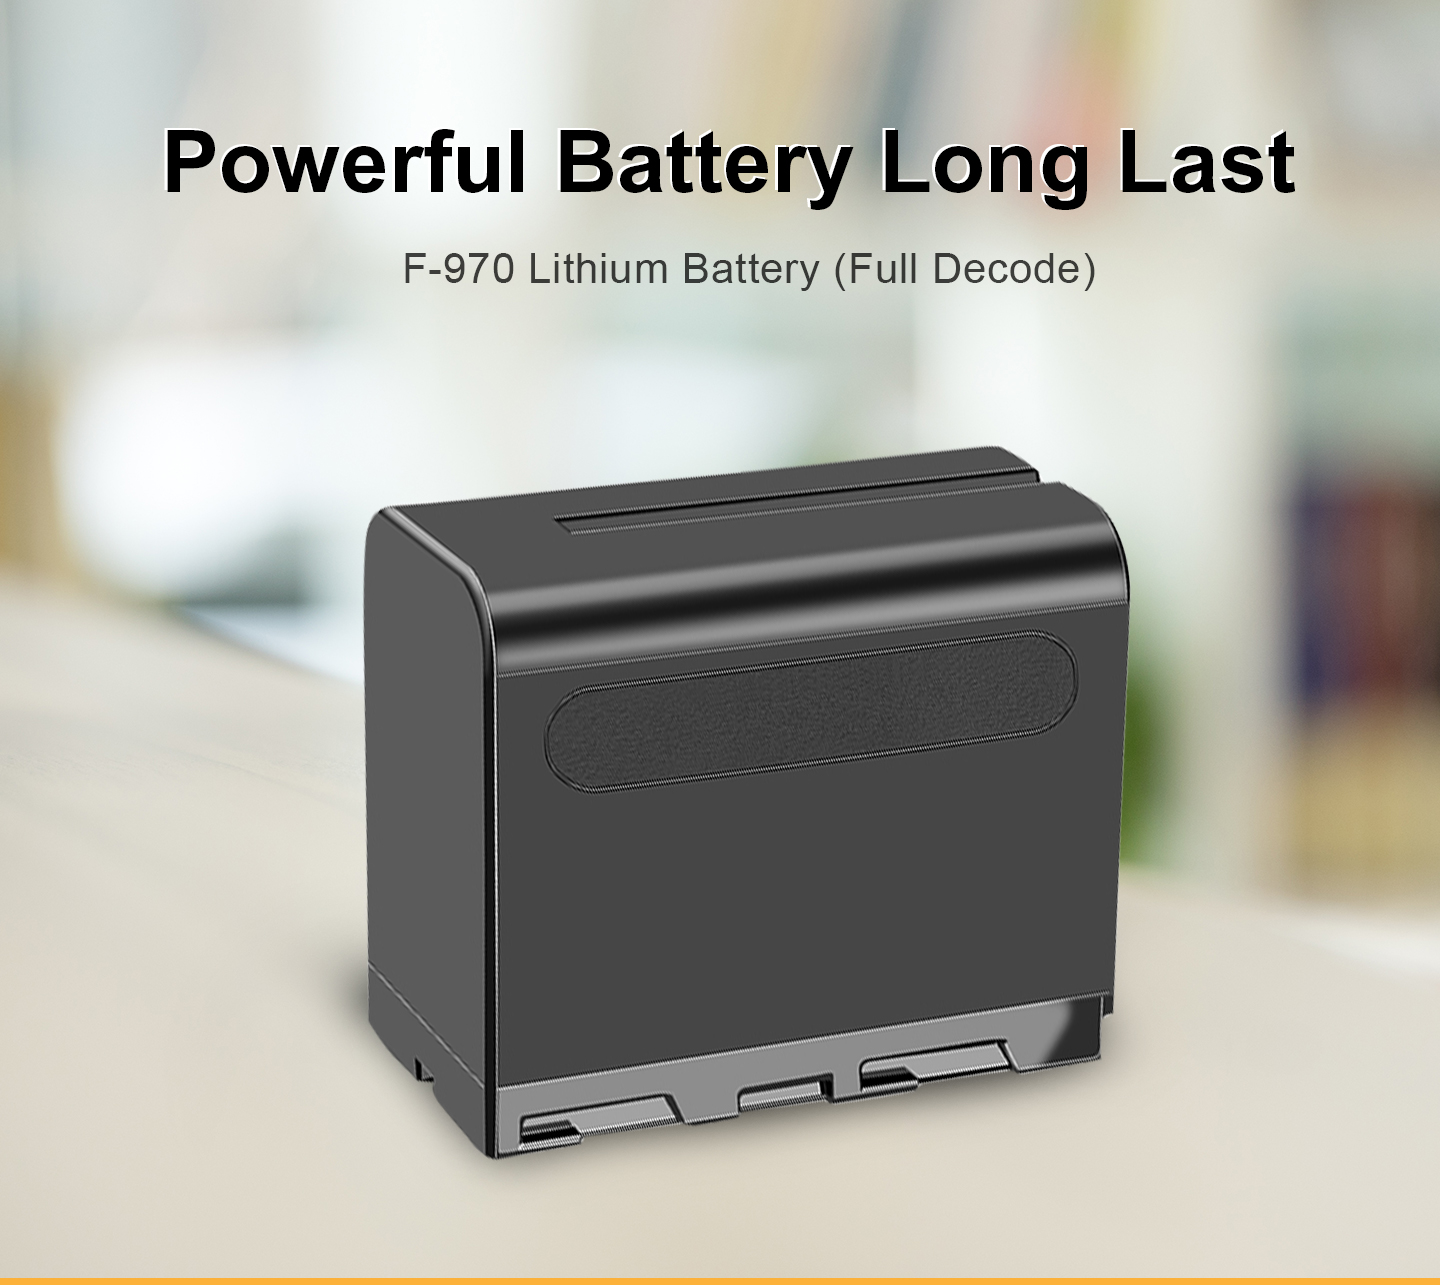 Powerful Battery Long Last